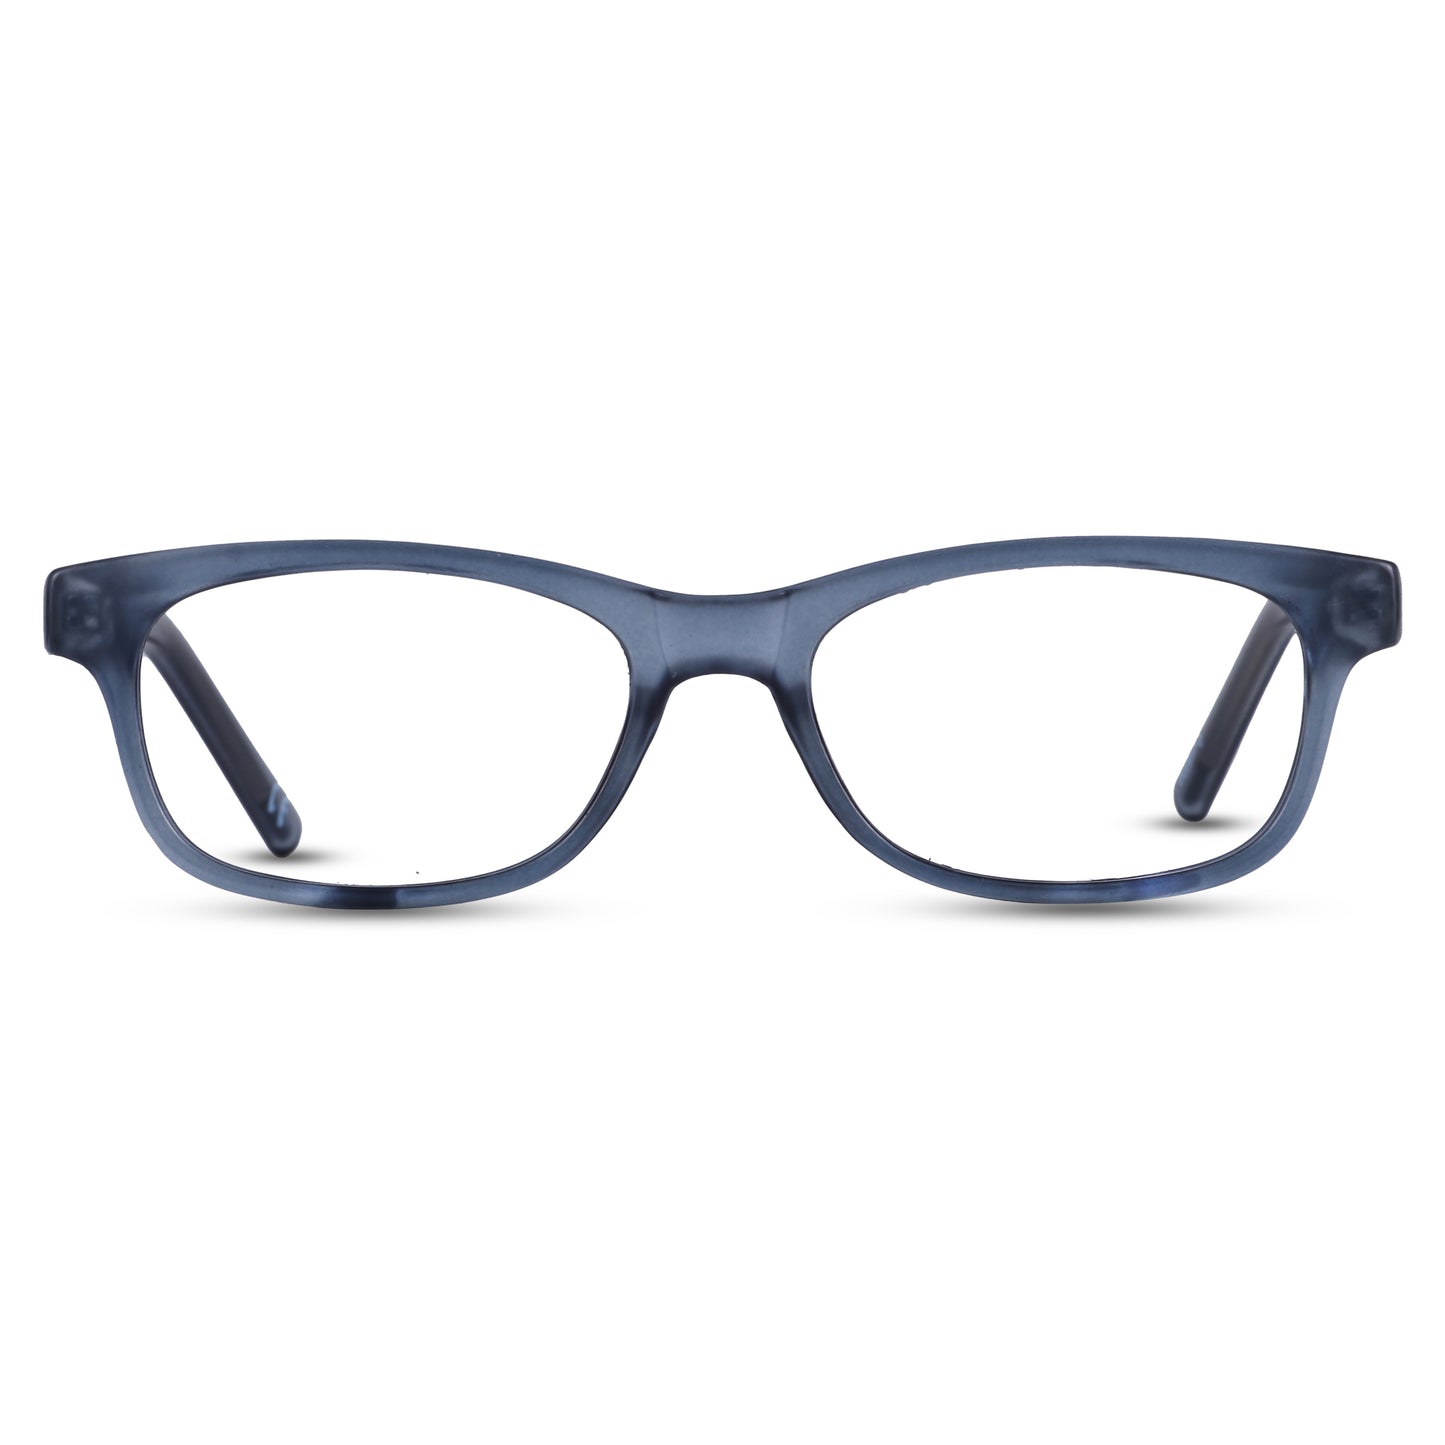 Loscomun Computer Glasses Matte Blue Oval Eyeglasses